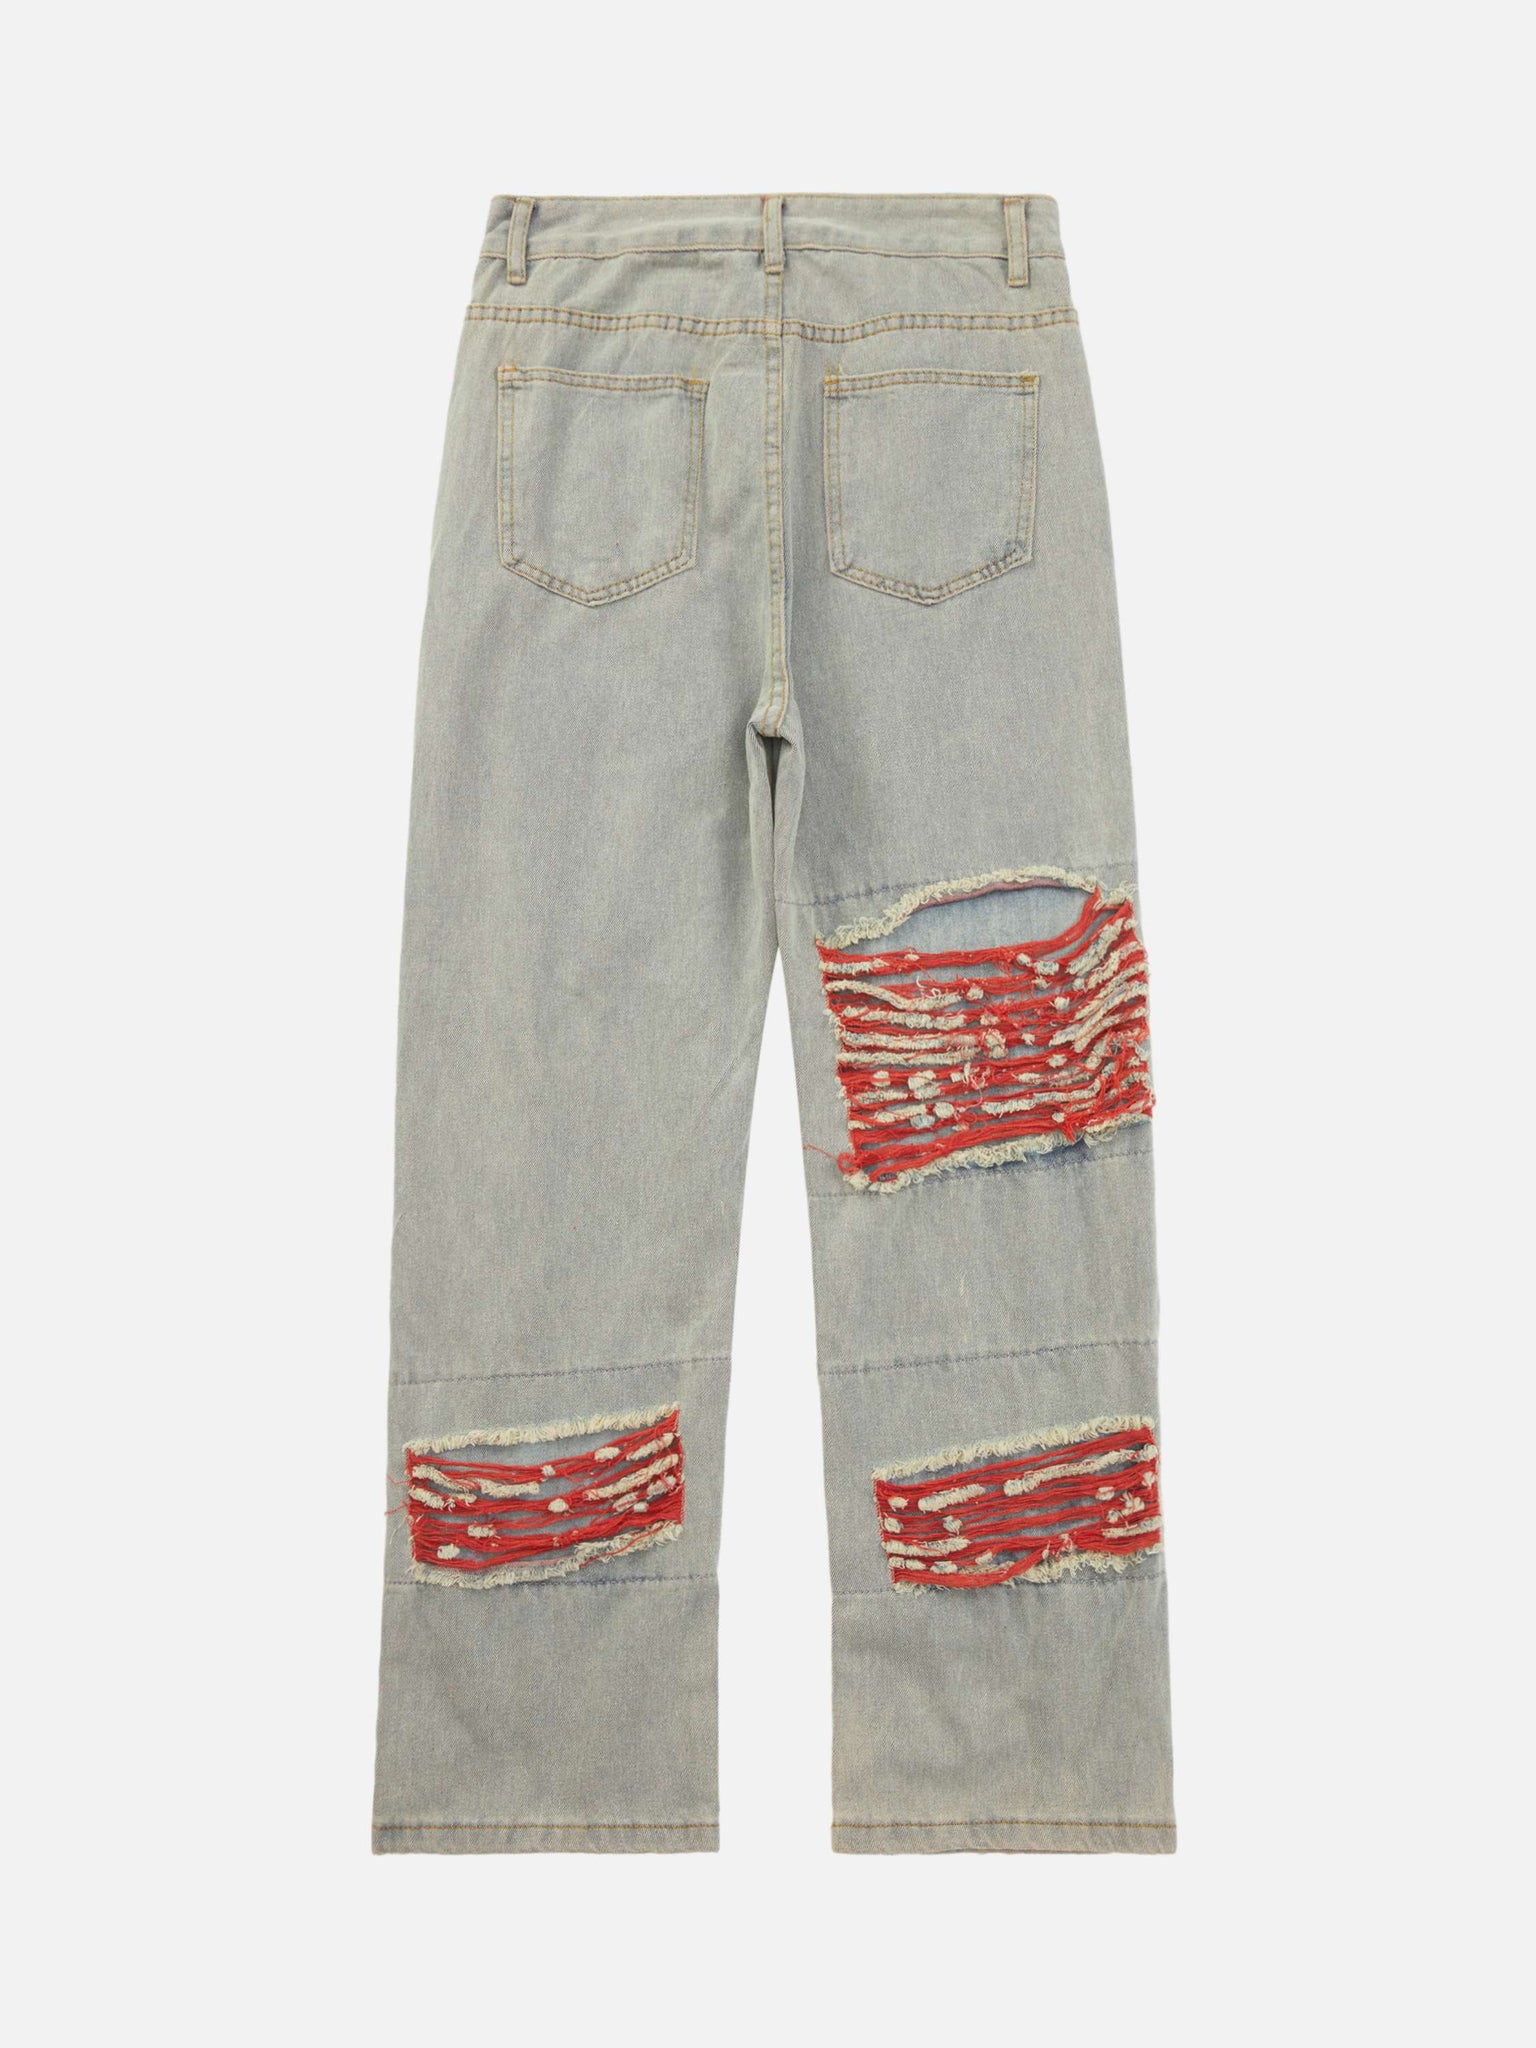 Thesupermade High Street Versatile Denim Jeans - 1729